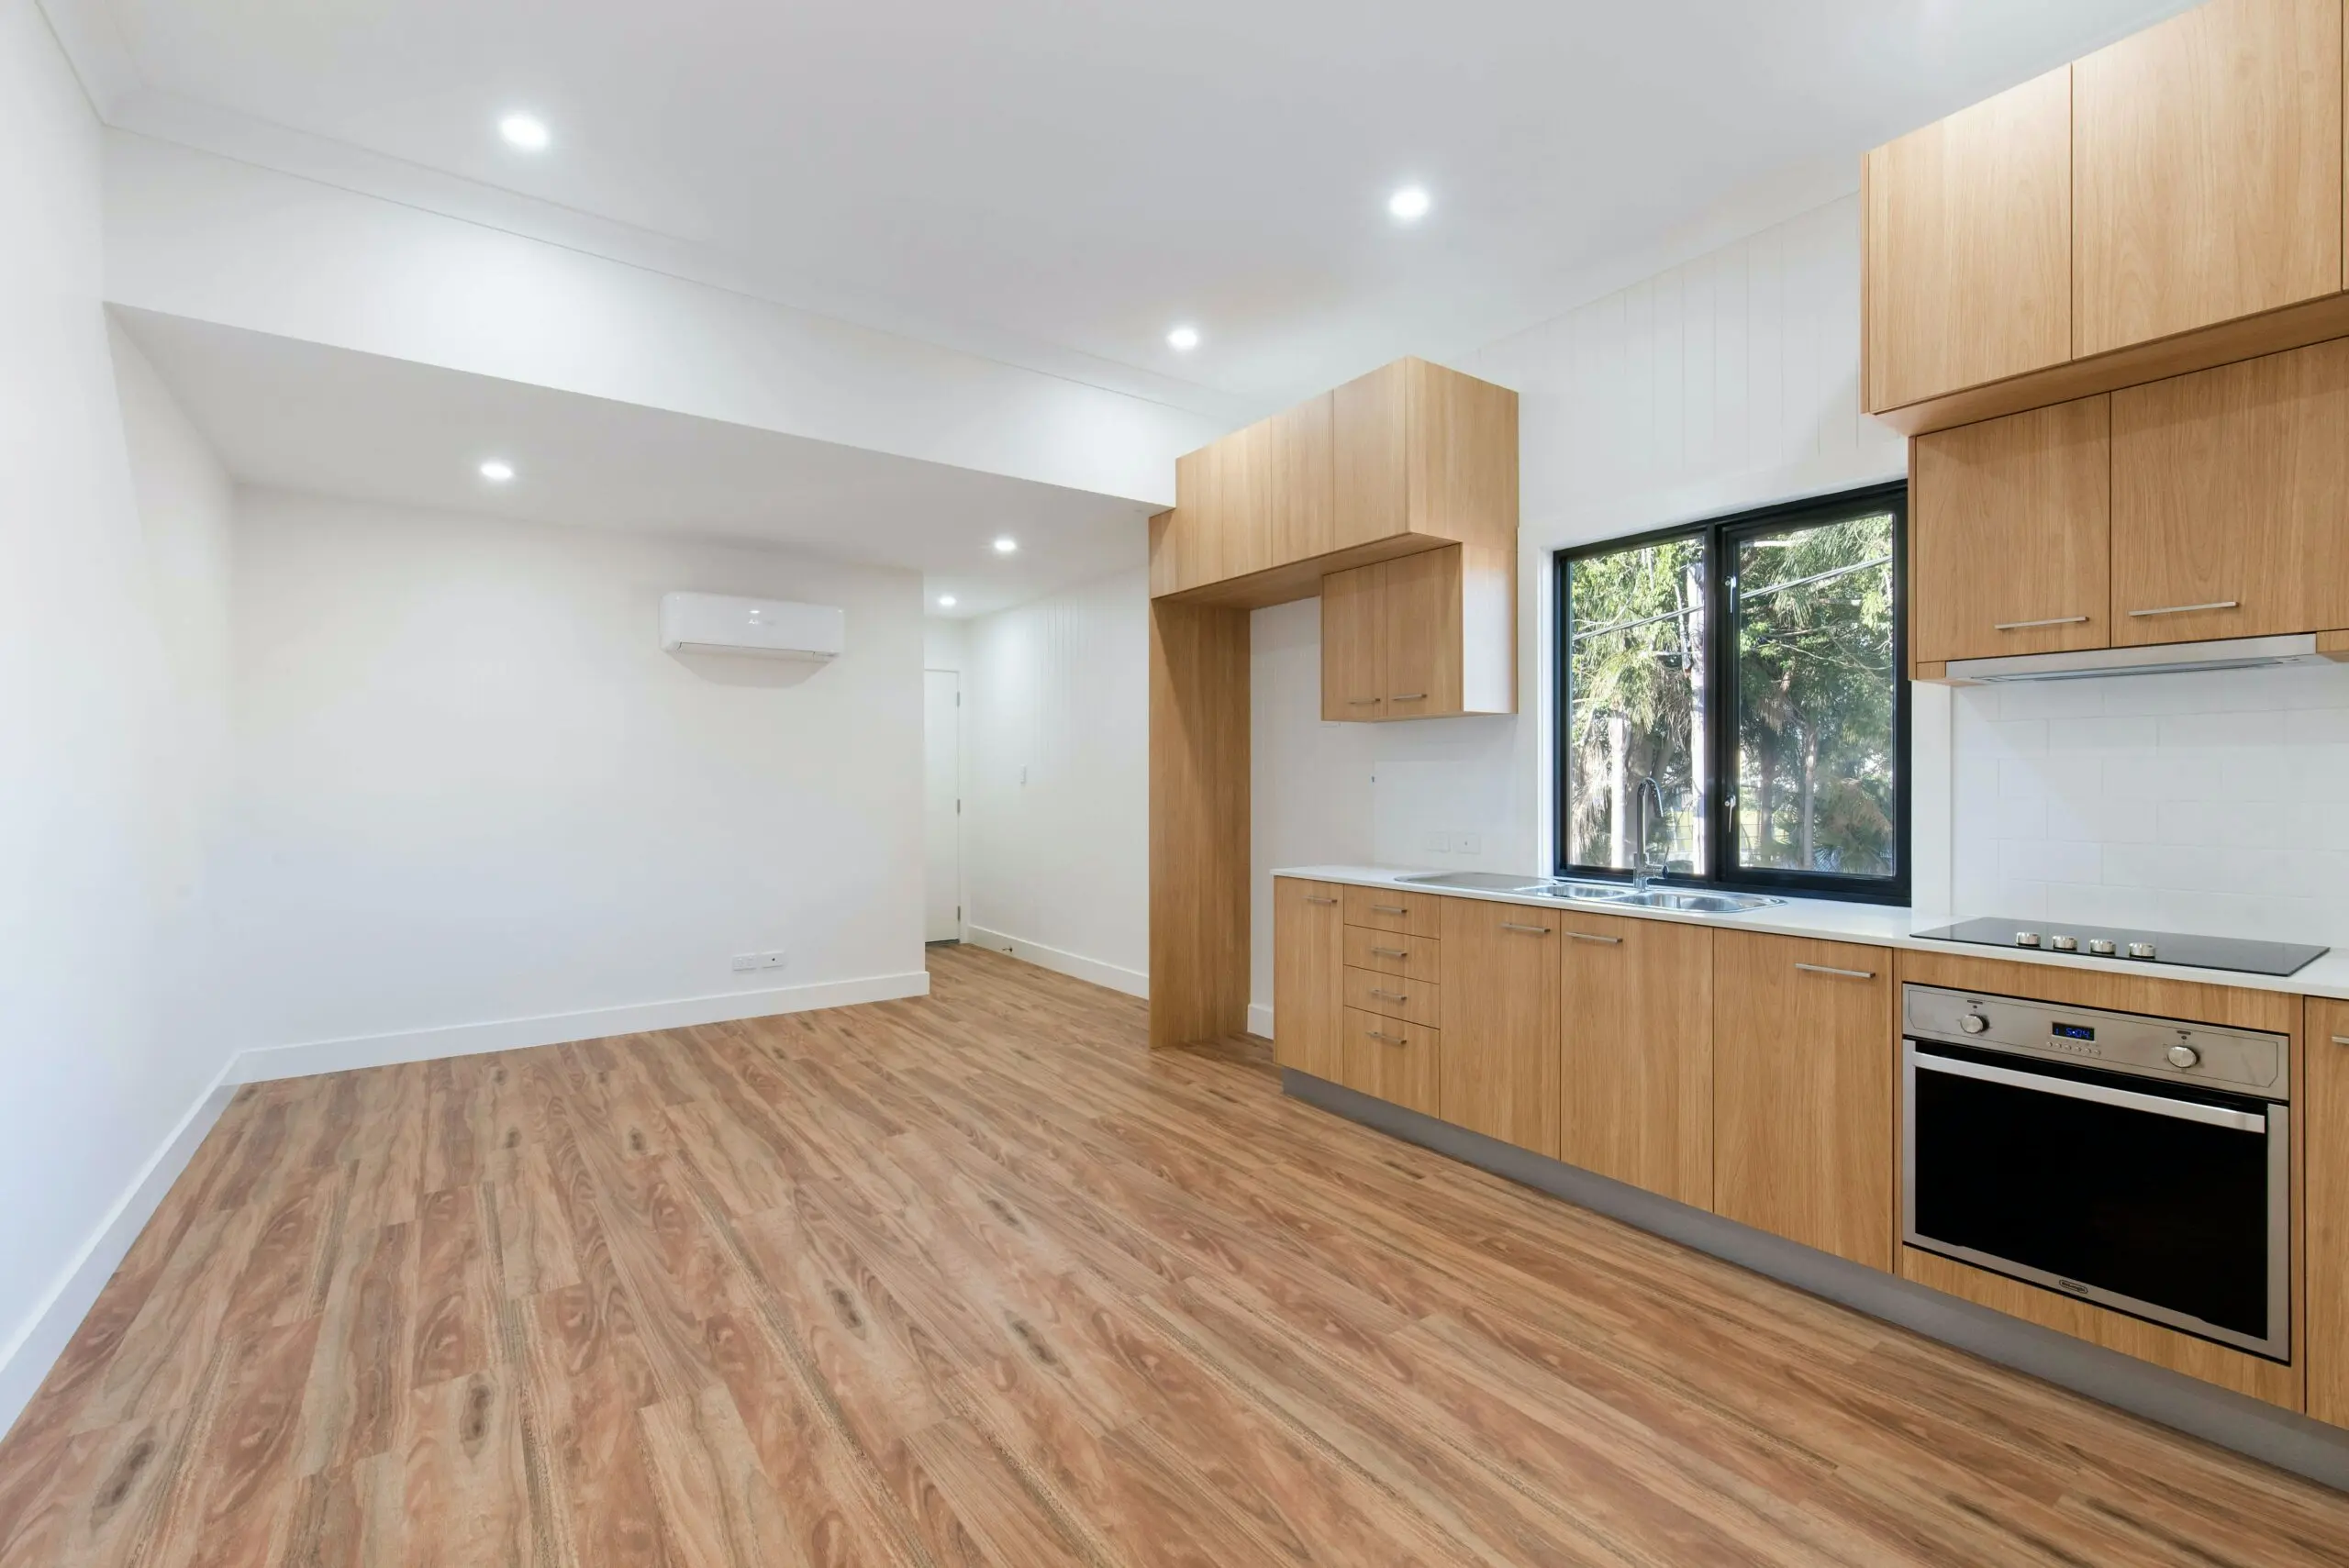 Laminate Flooring in Kitchen Pros & Cons